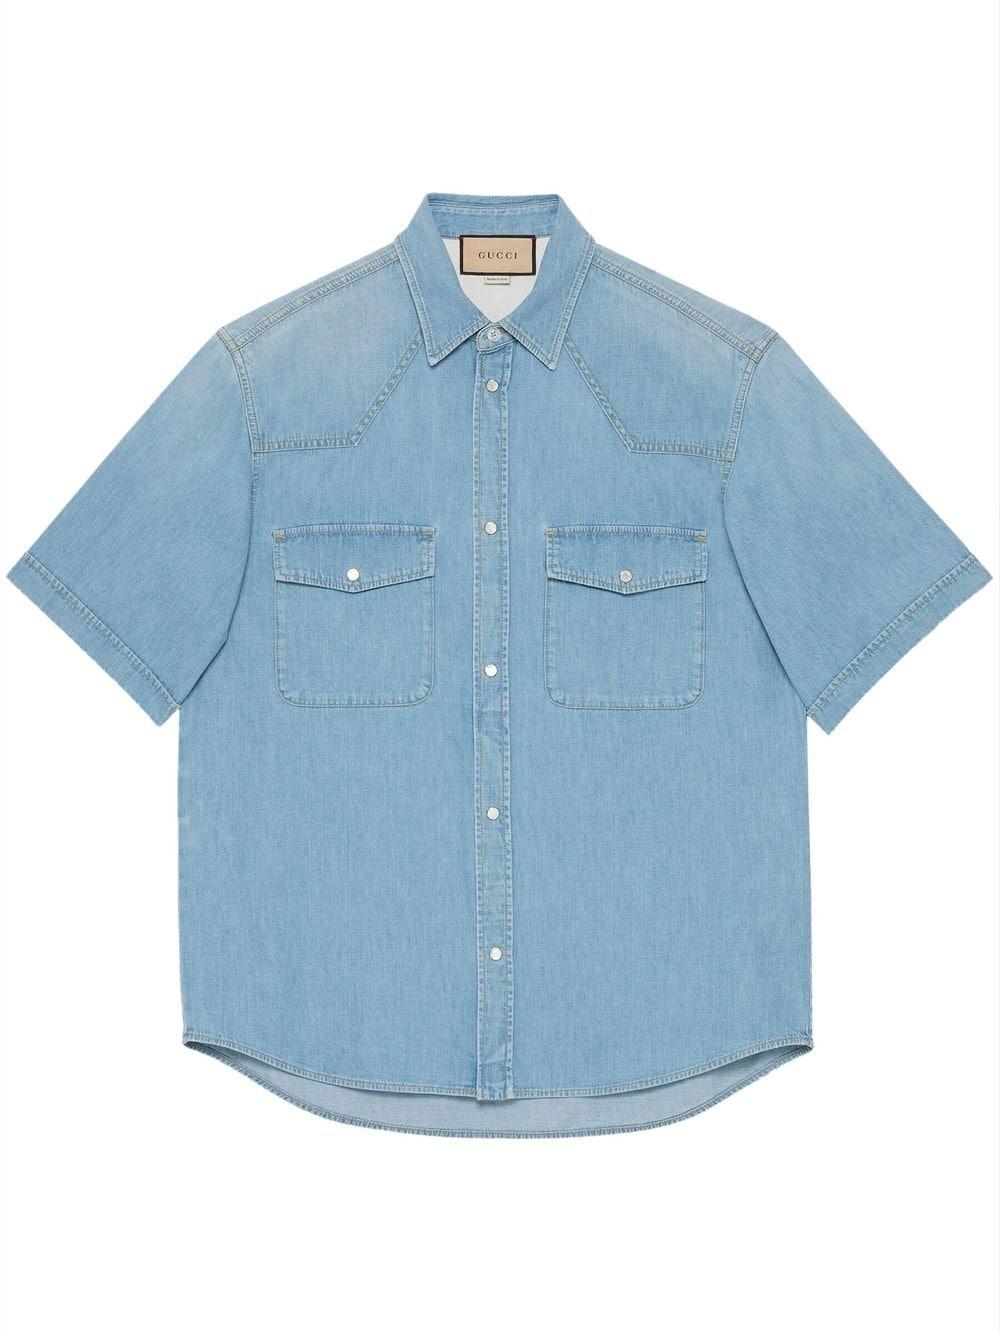 Shop Gucci Timeless Elegance: Classic Blue Denim Shirt For Men